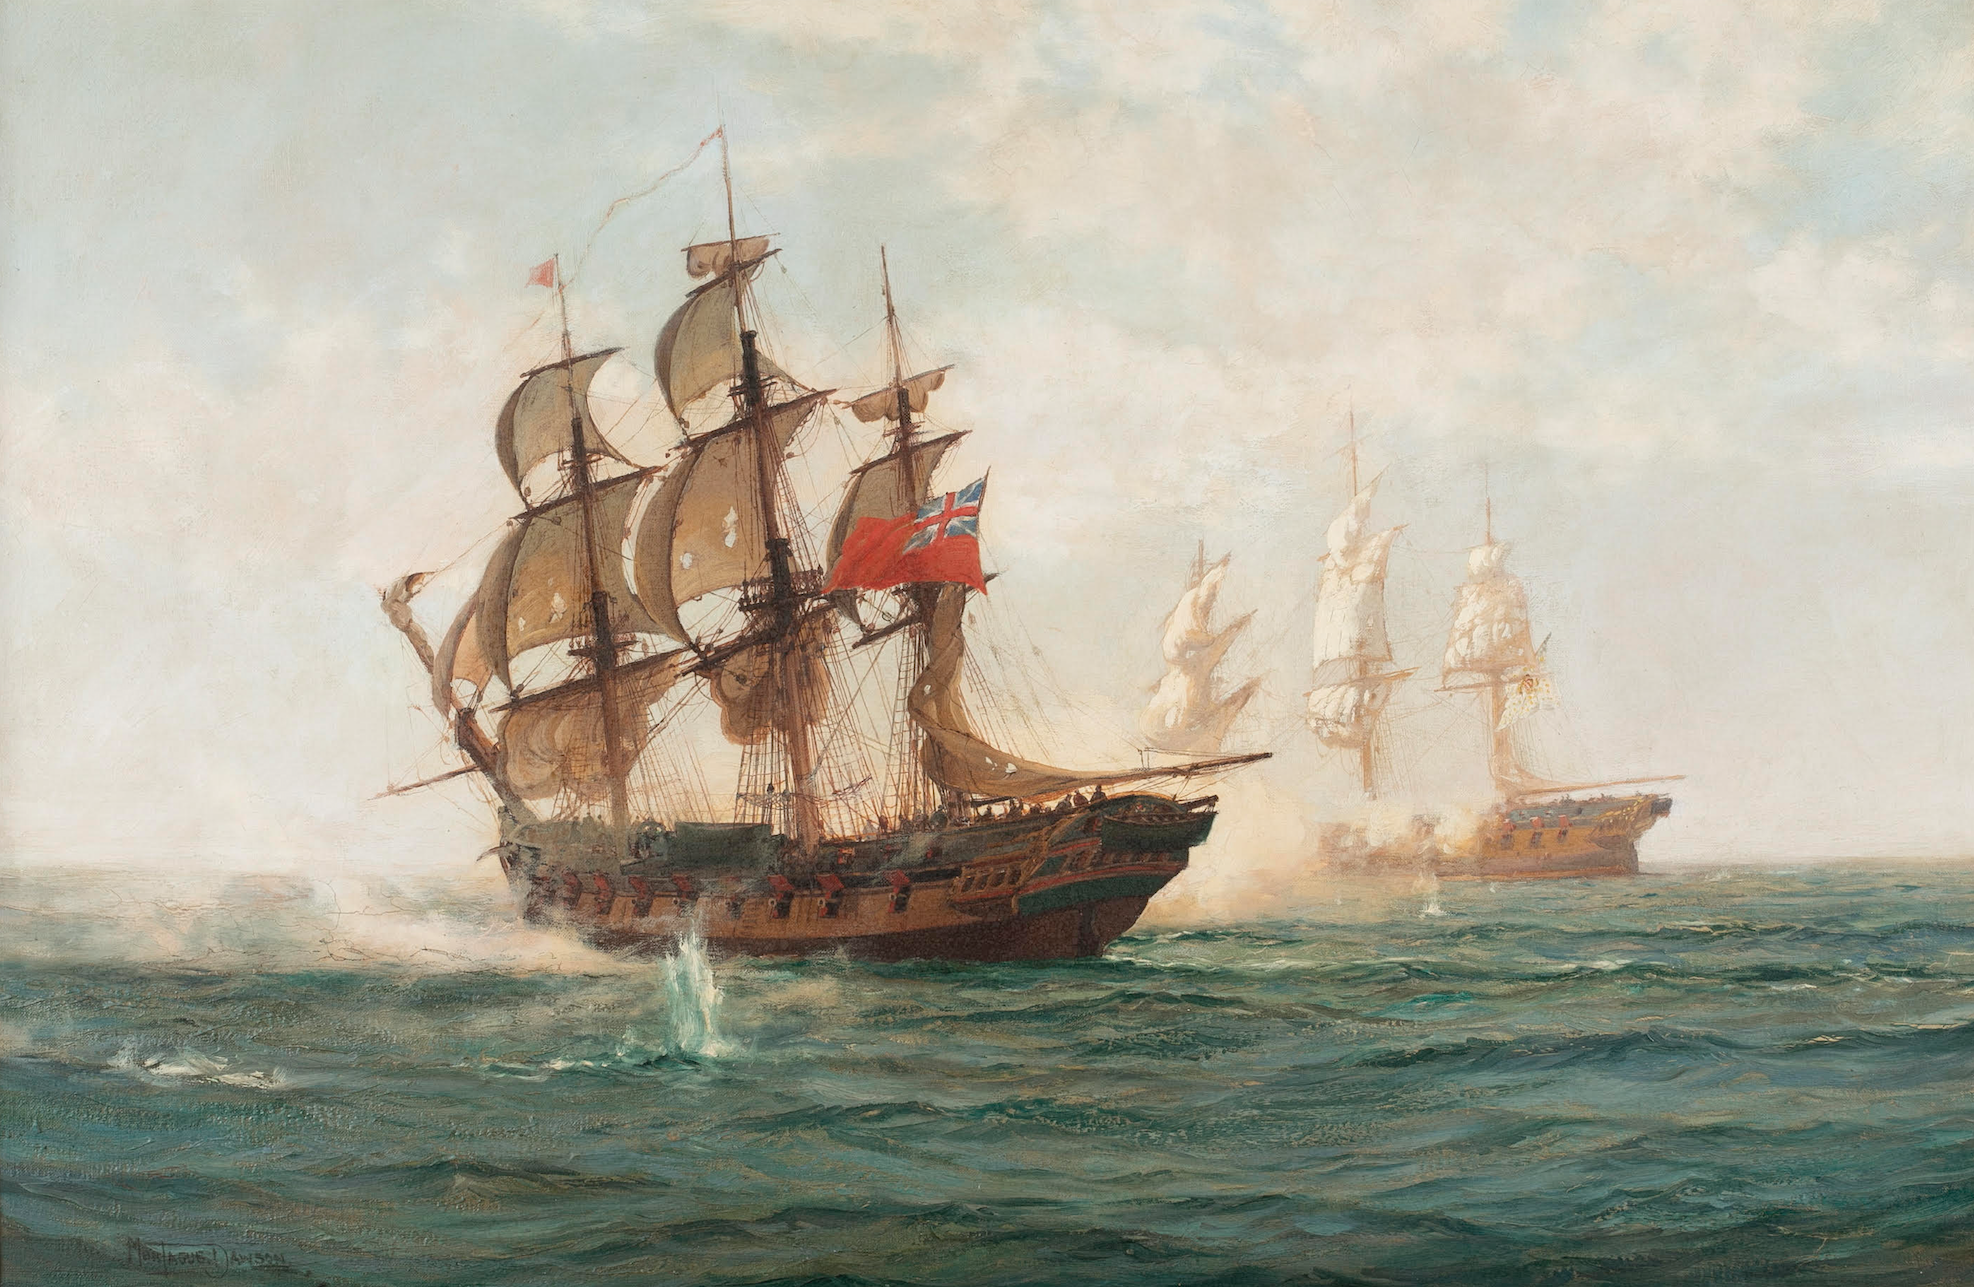 Montague Dawson marine painting is flagship of Quinn’s Jan. 26 auction